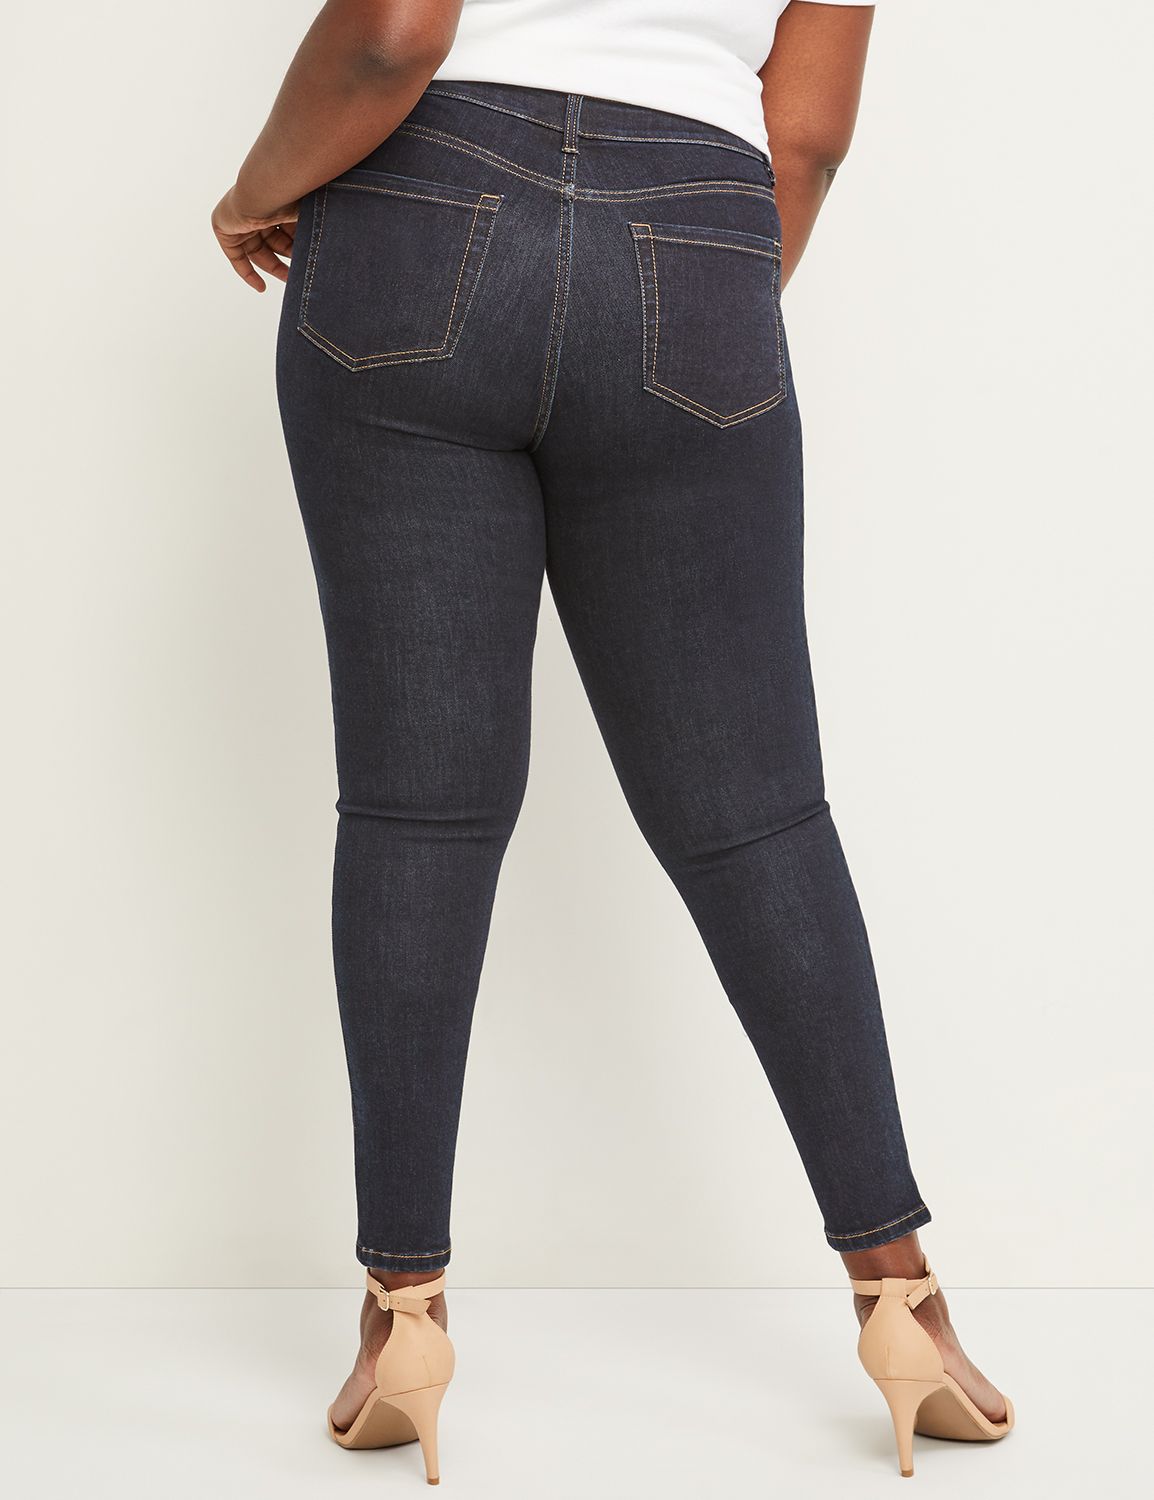 westport signature fit bootcut jeans